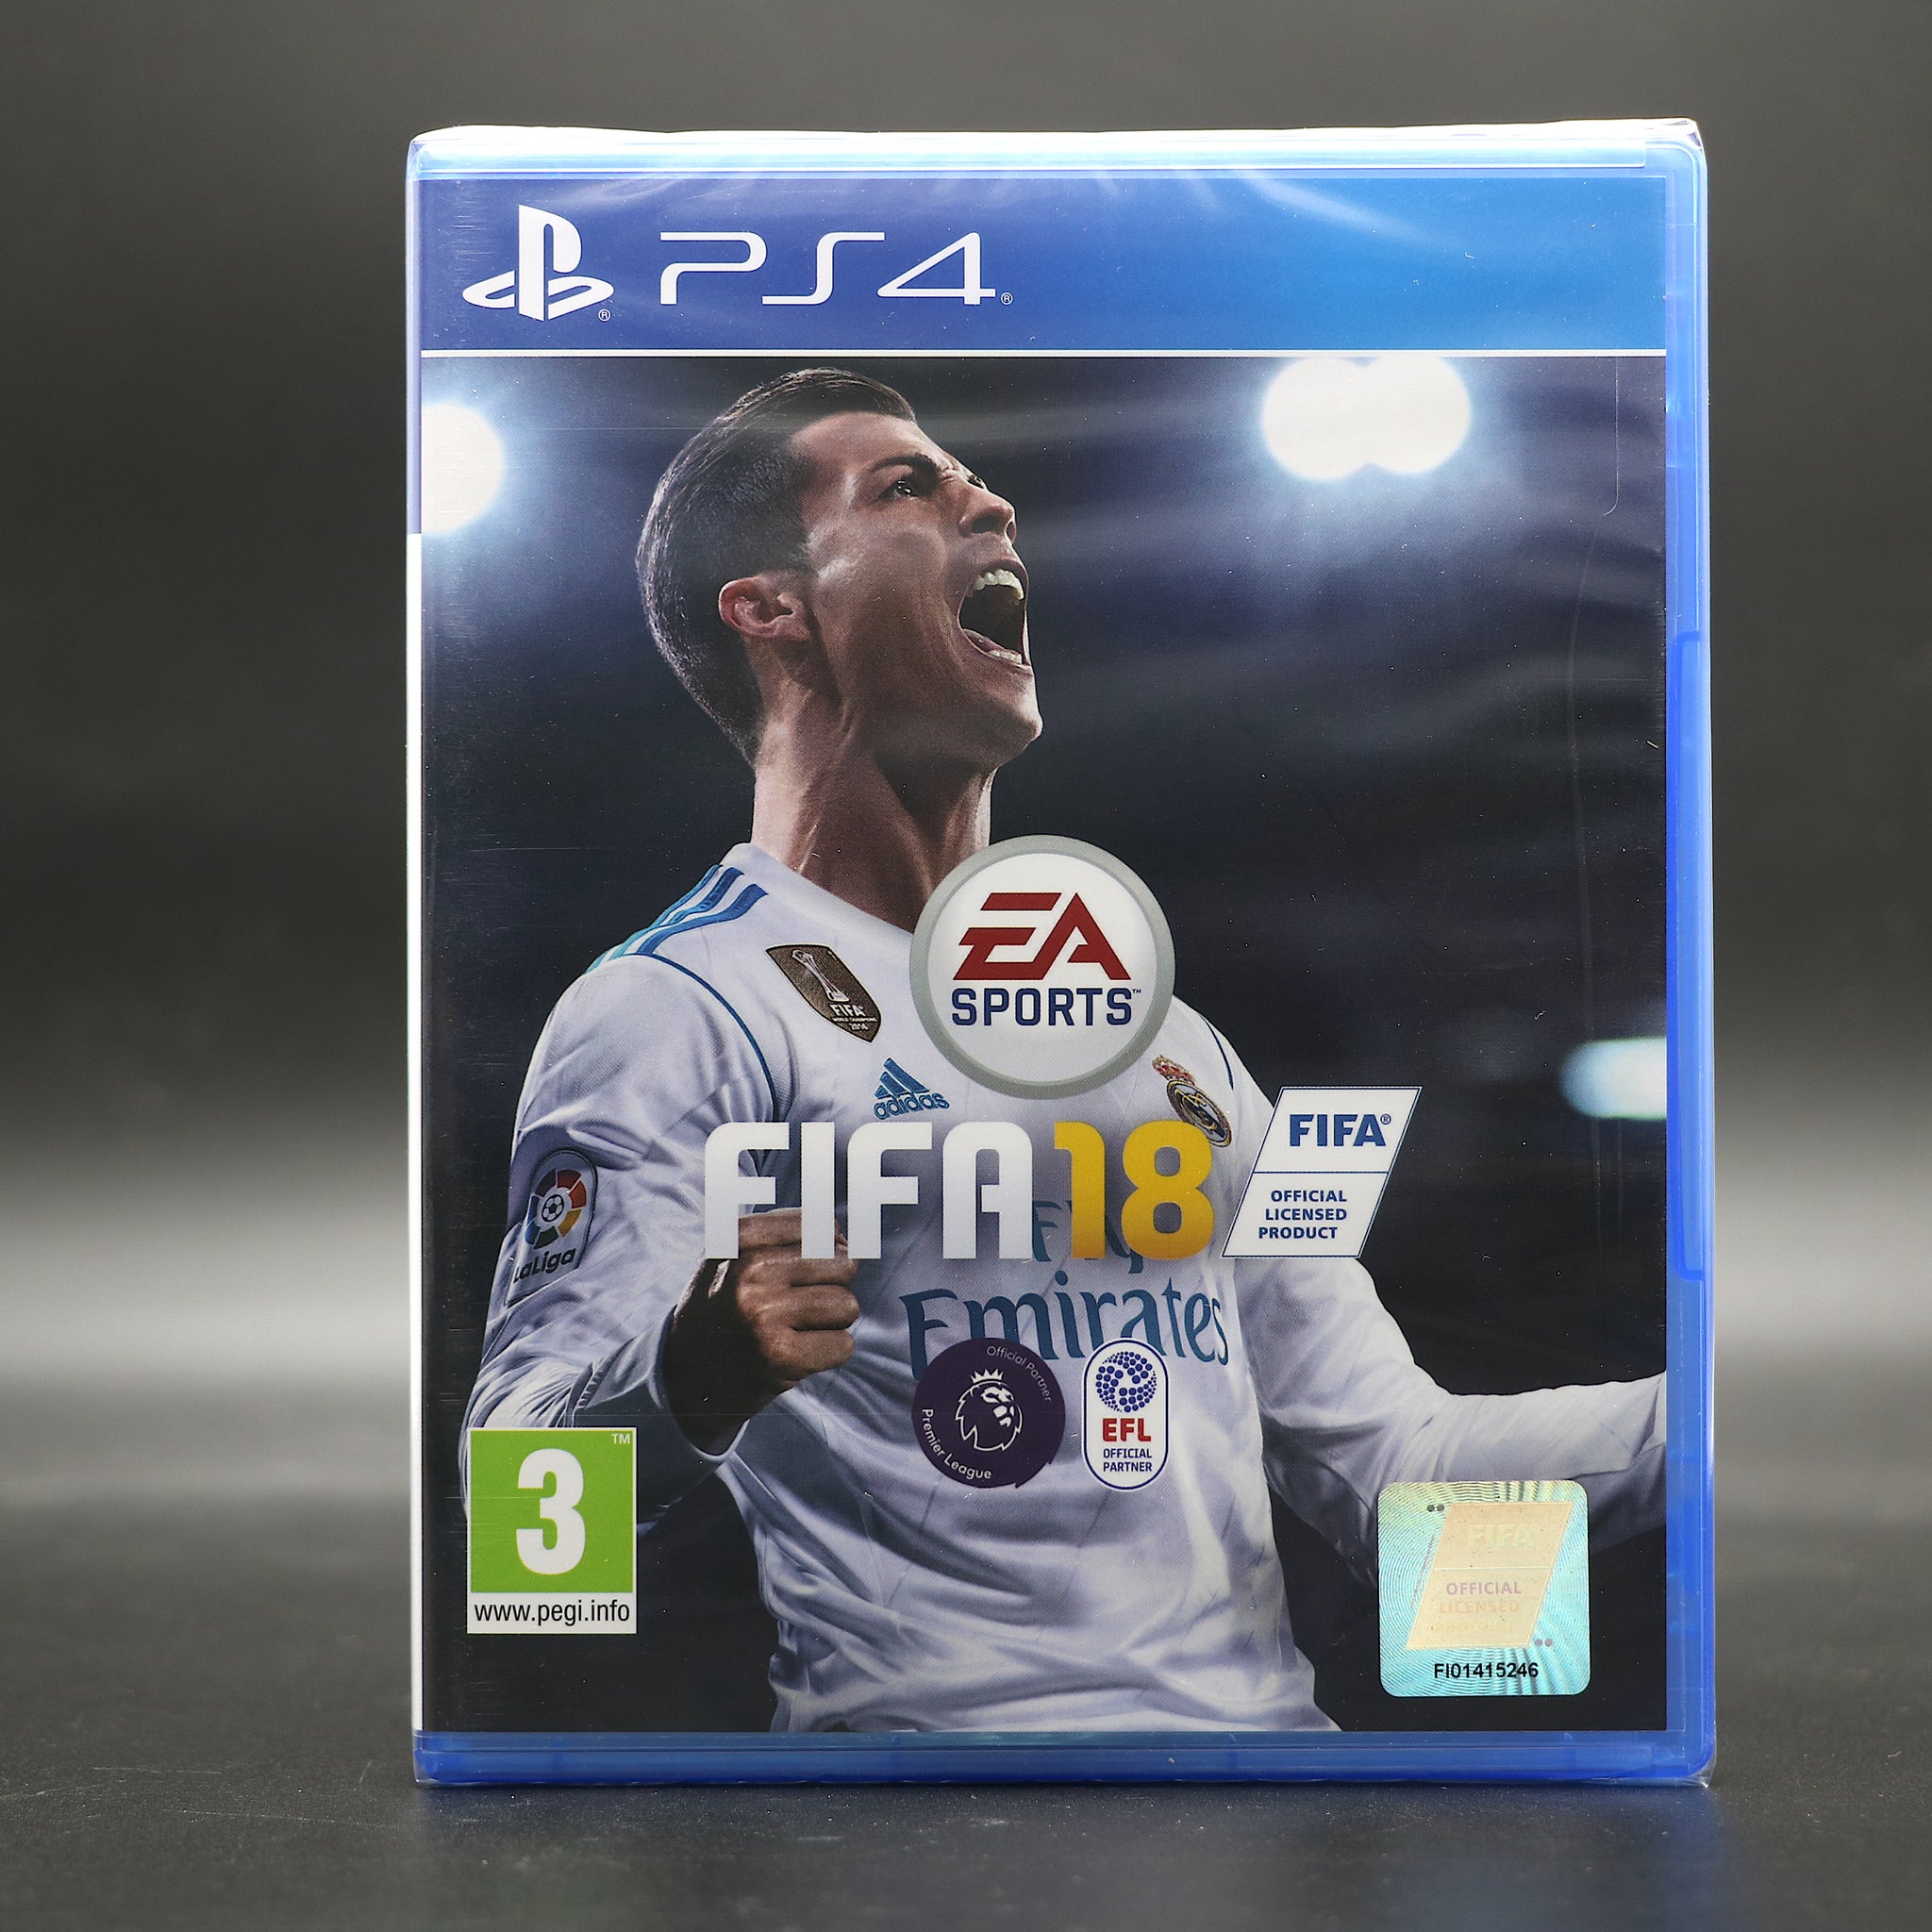 FIFA 18 - EA Sports - Sony Playstation 4 PS4 Football Game - New & Sealed